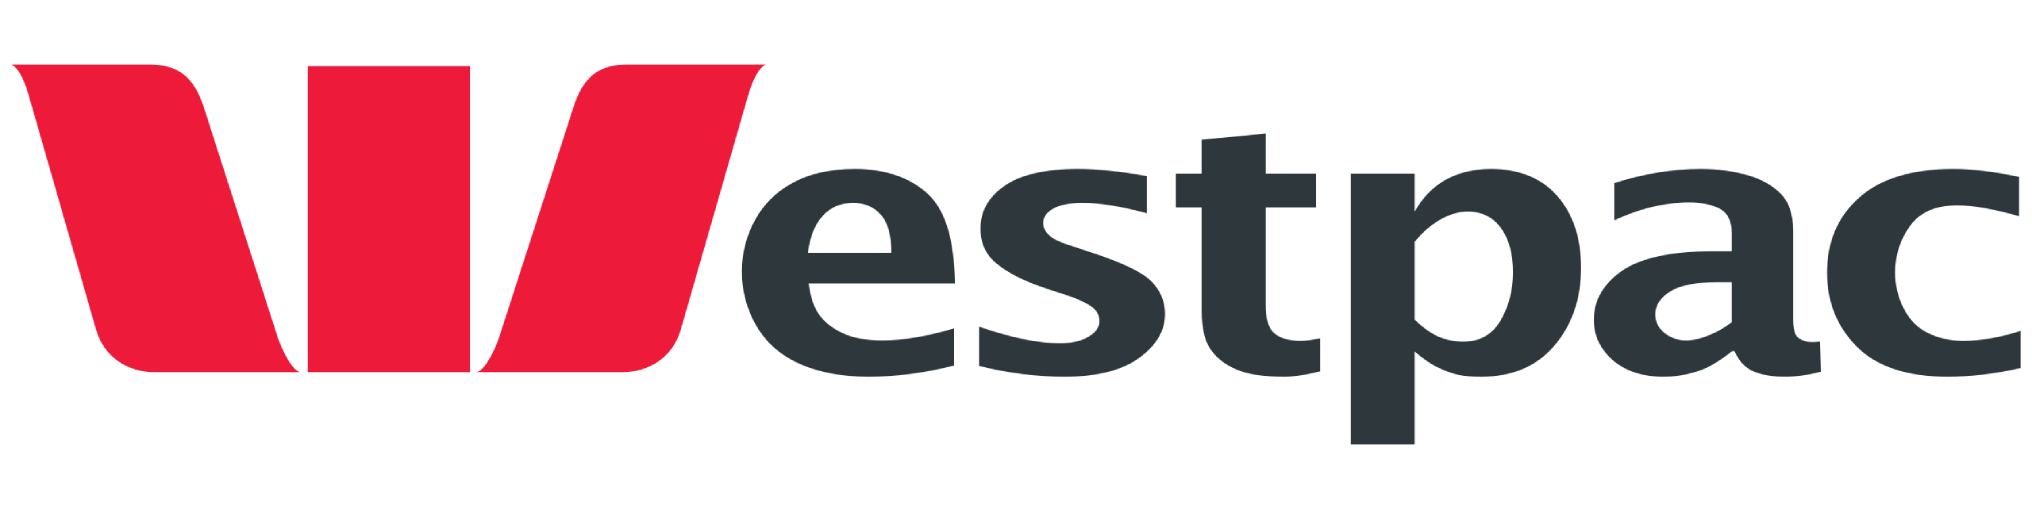 brand-logo2